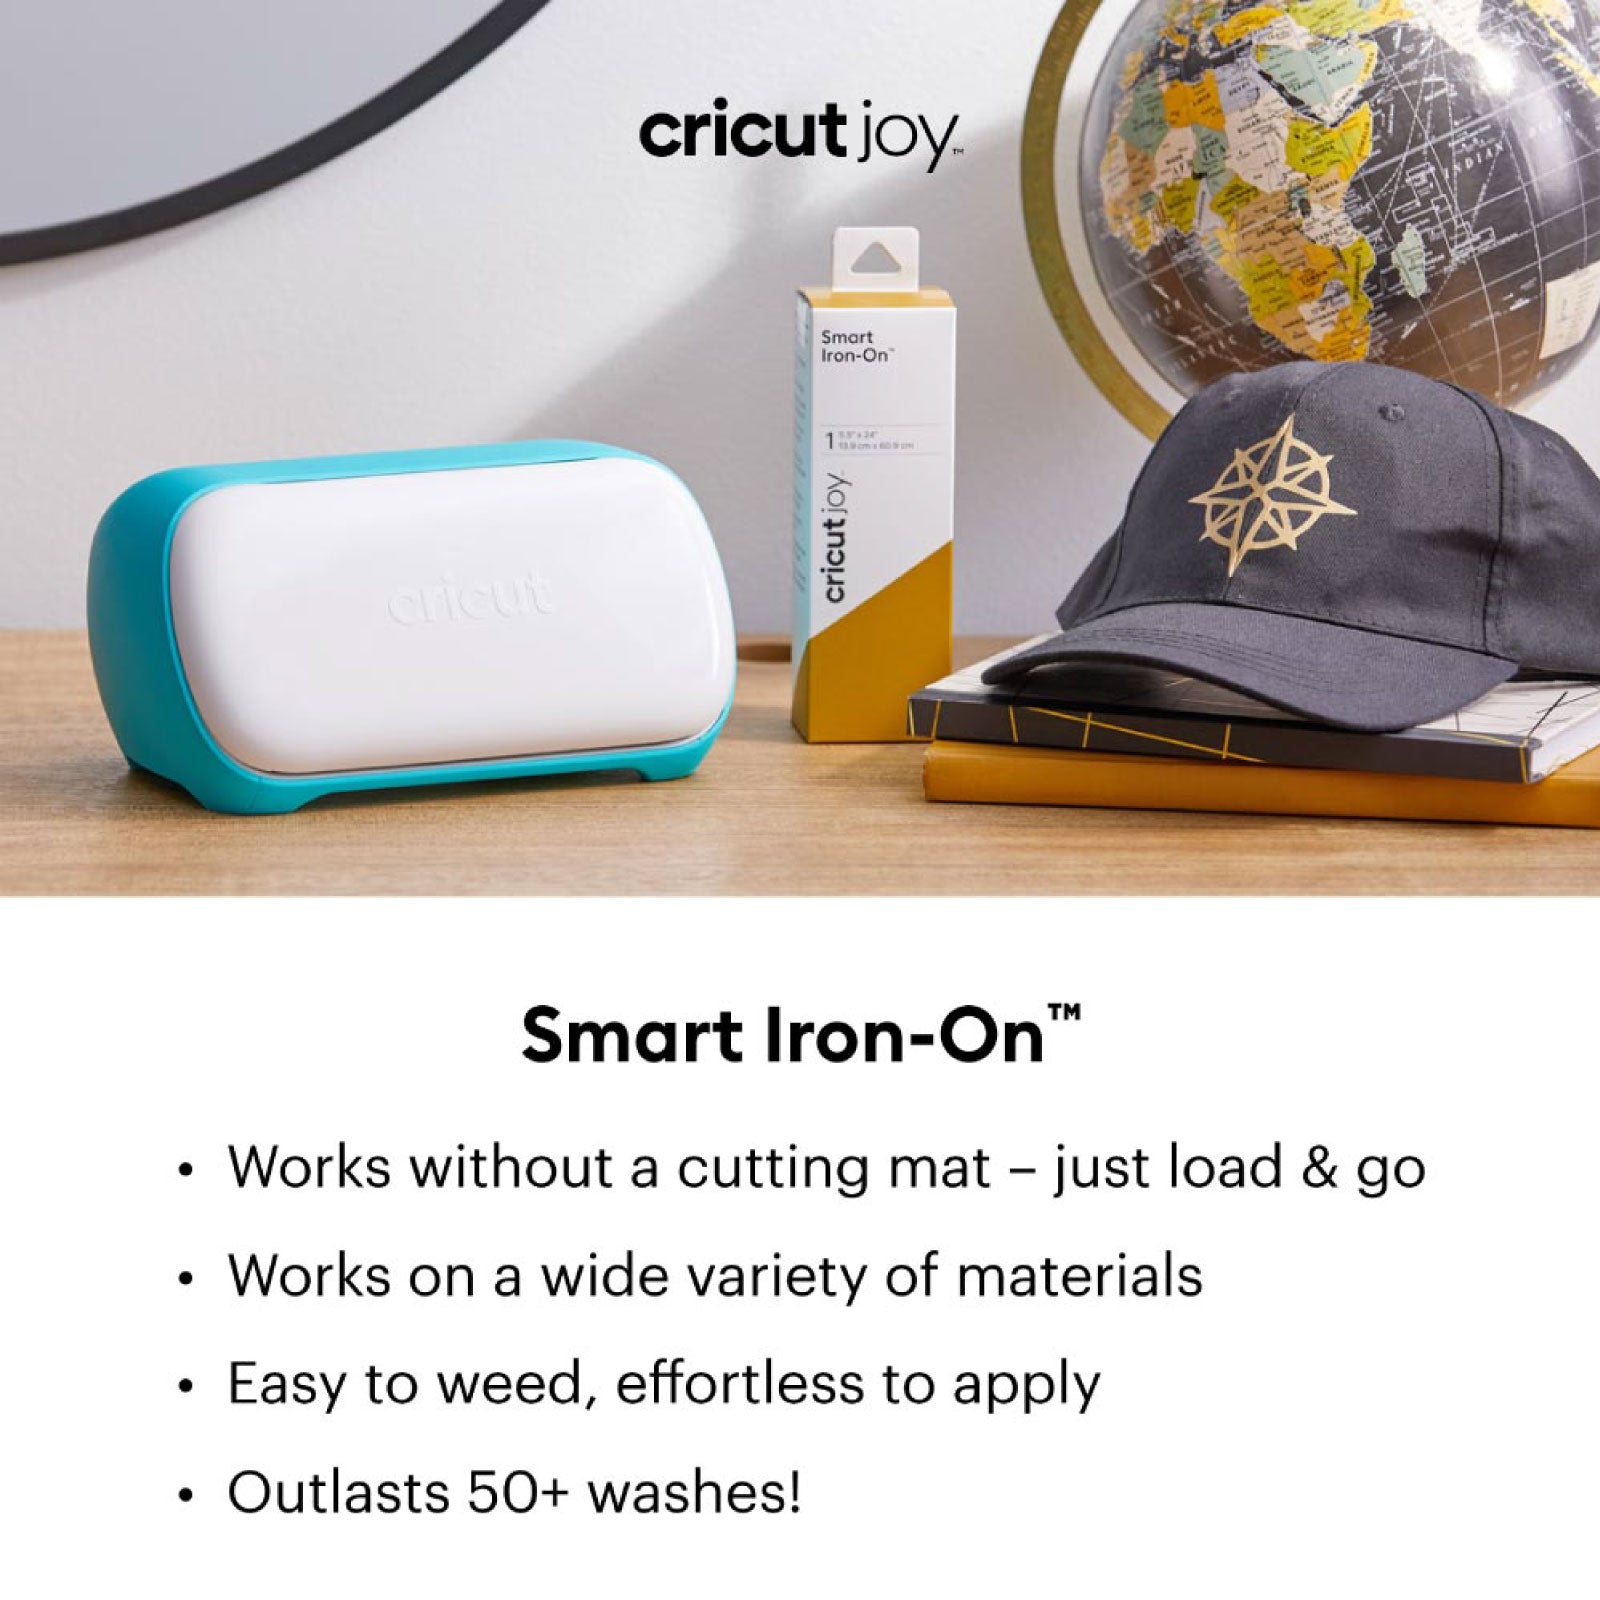 Cricut Joy Smart Iron On, Silver - Damaged Package